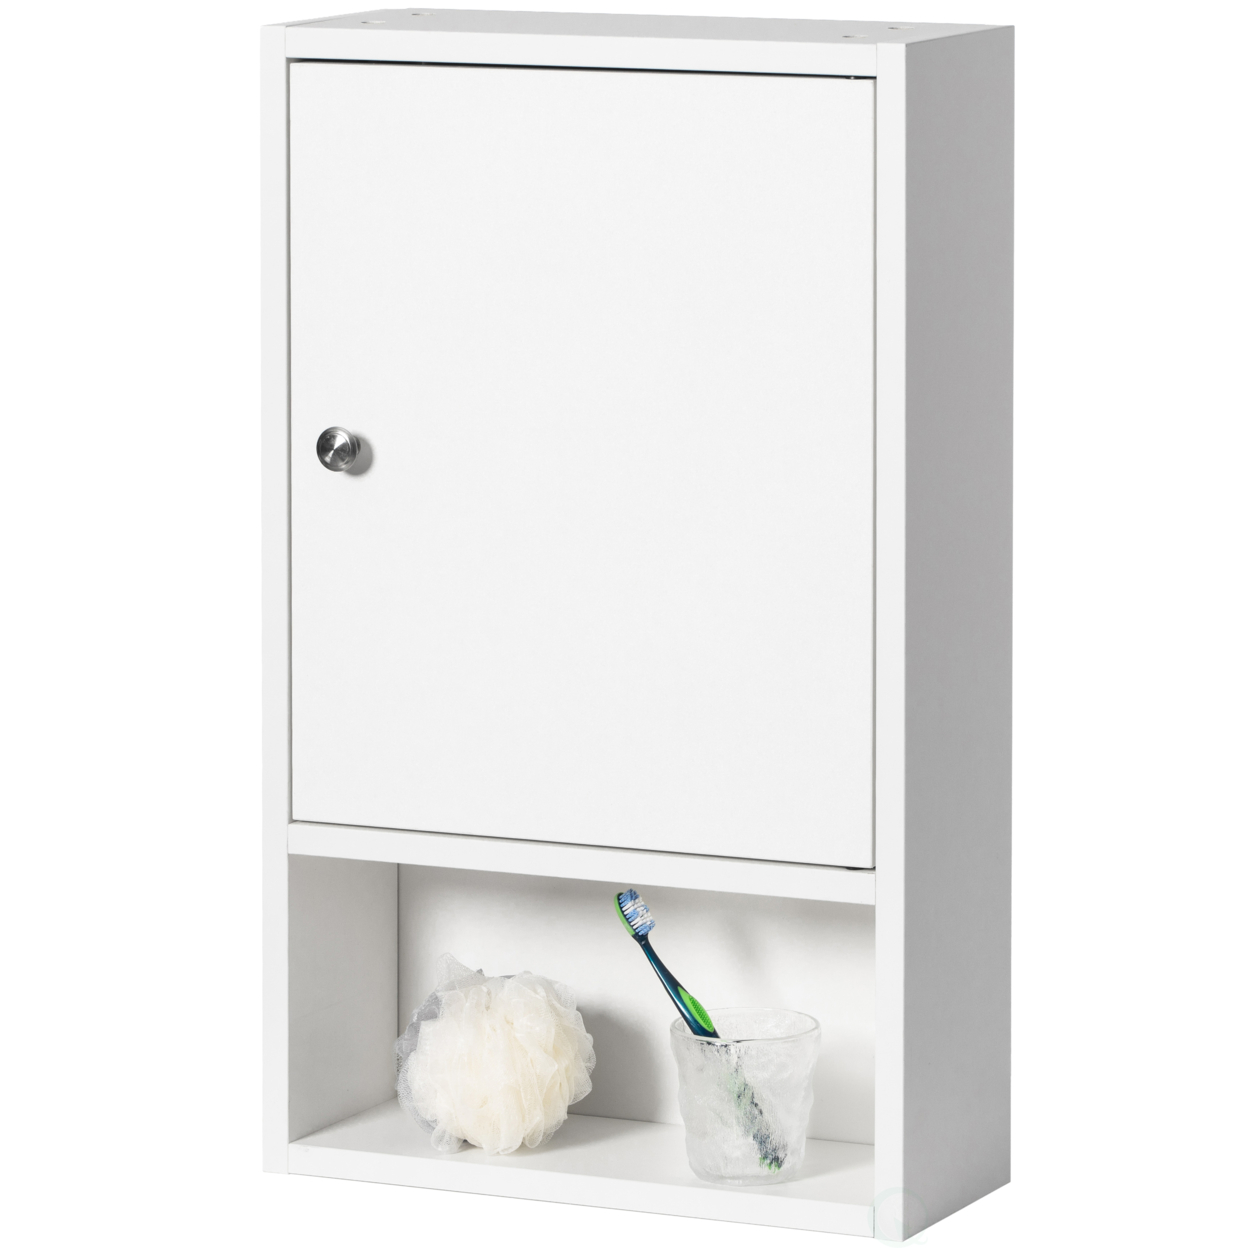 Wall Mount Bathroom Storage Cabinet With Single Door 2 Adjustable Shelves Medicine Organizer Storage Furniture - White